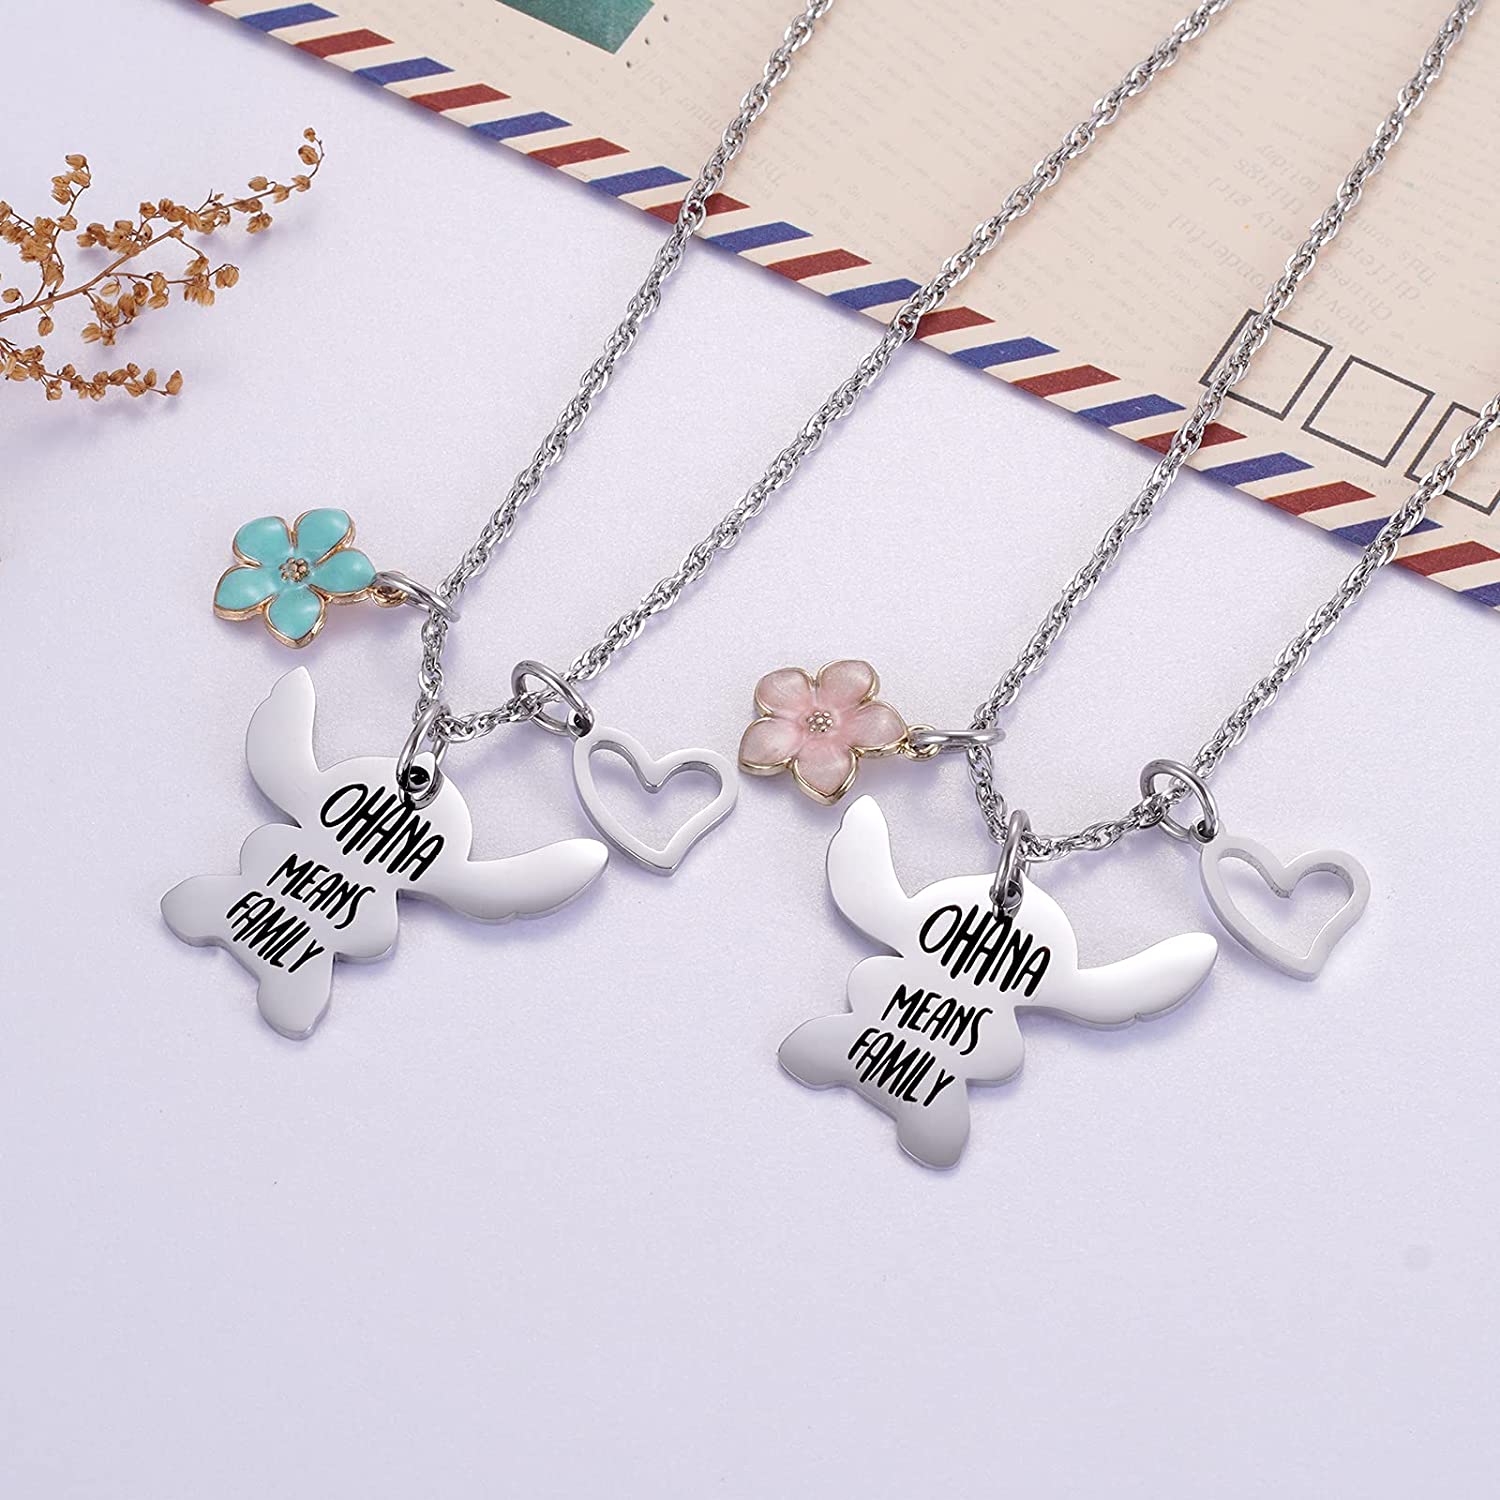 Ralukiia Ohana Means Family Necklace Stitch Keychain Jewellery Gifts for Boys Girls